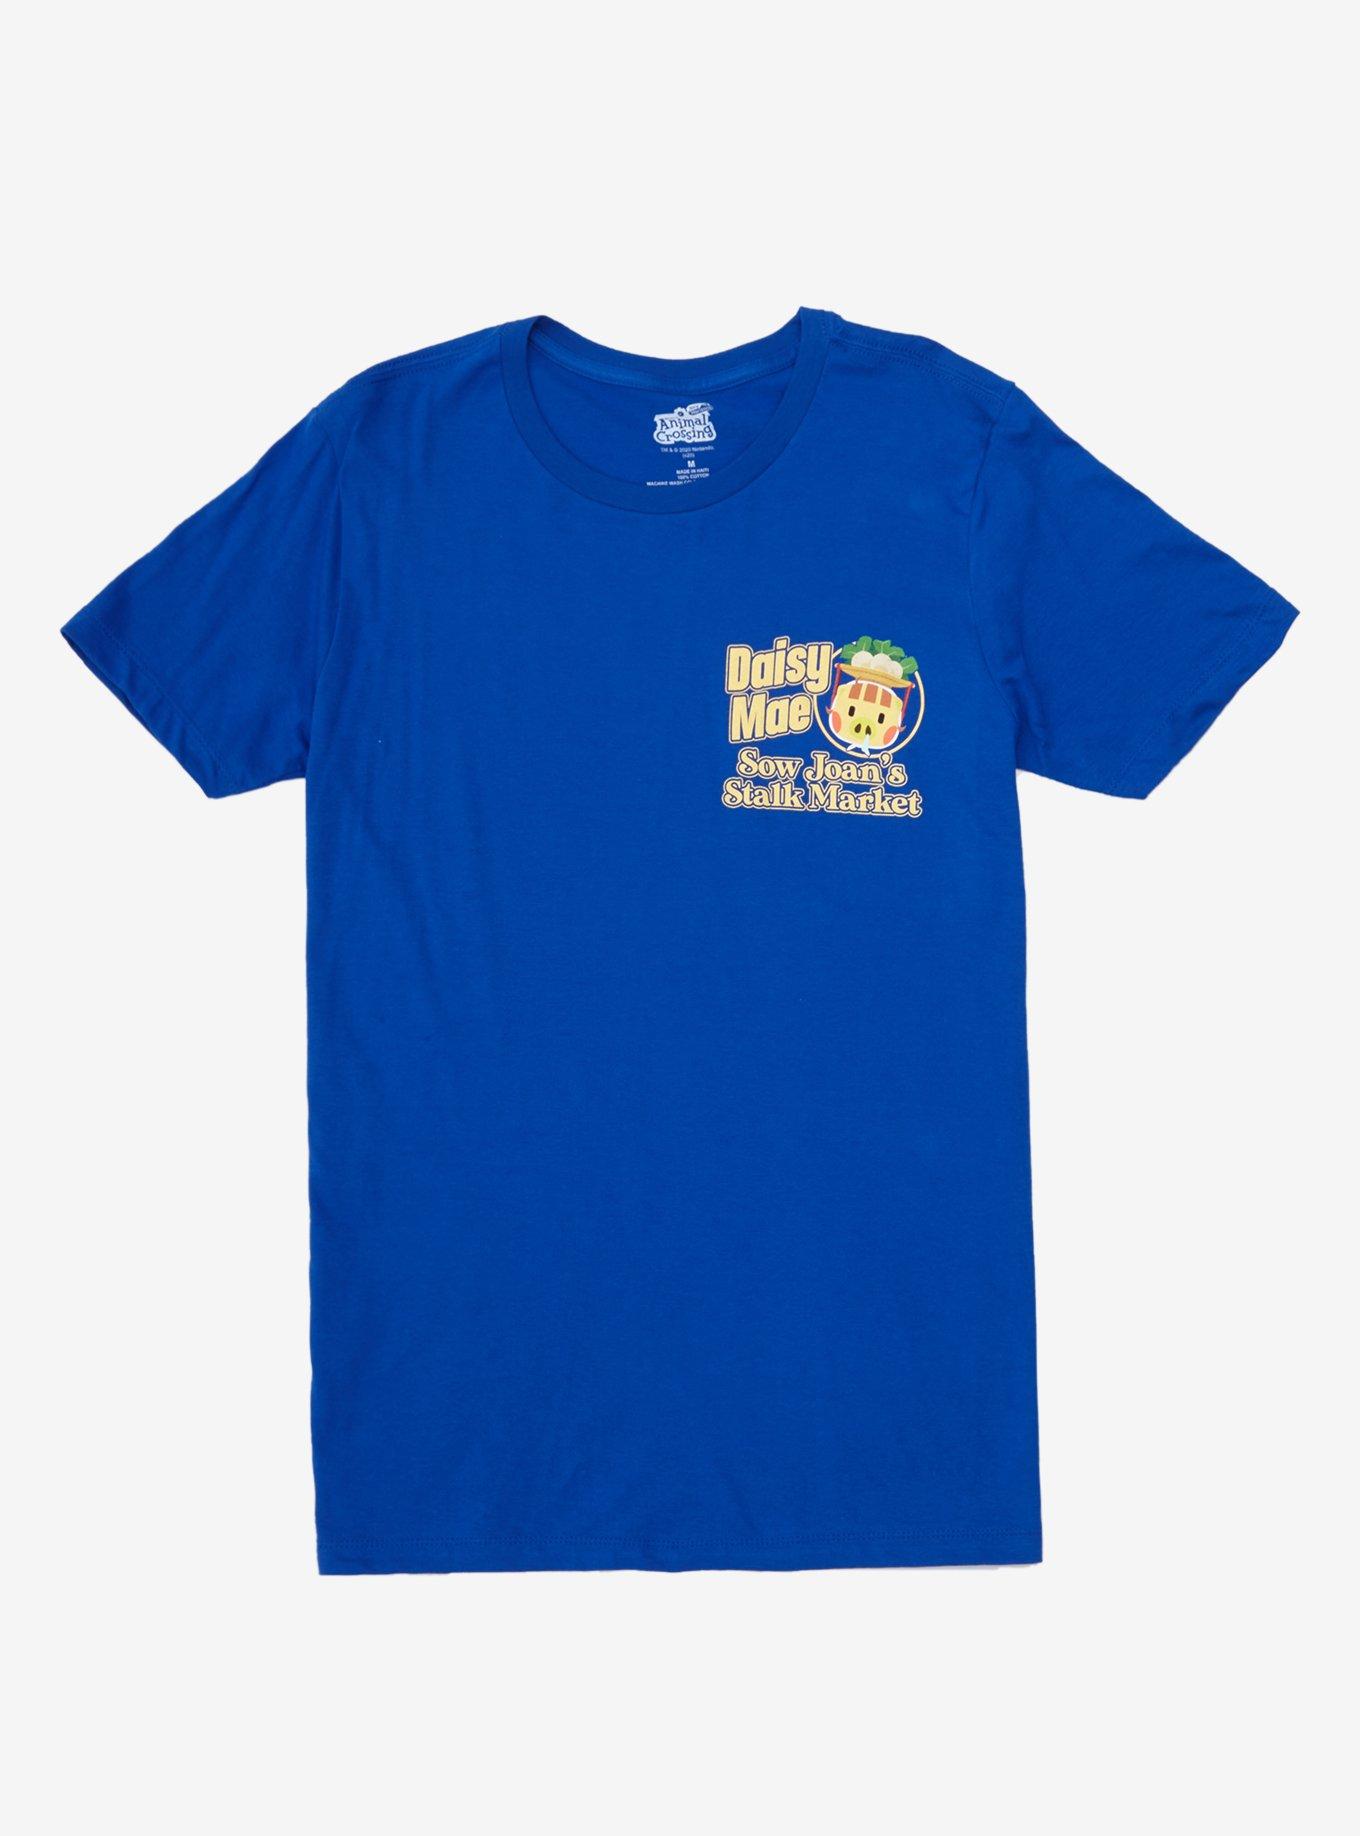 Animal Crossing: New Horizons Stalk Market T-Shirt | Hot Topic